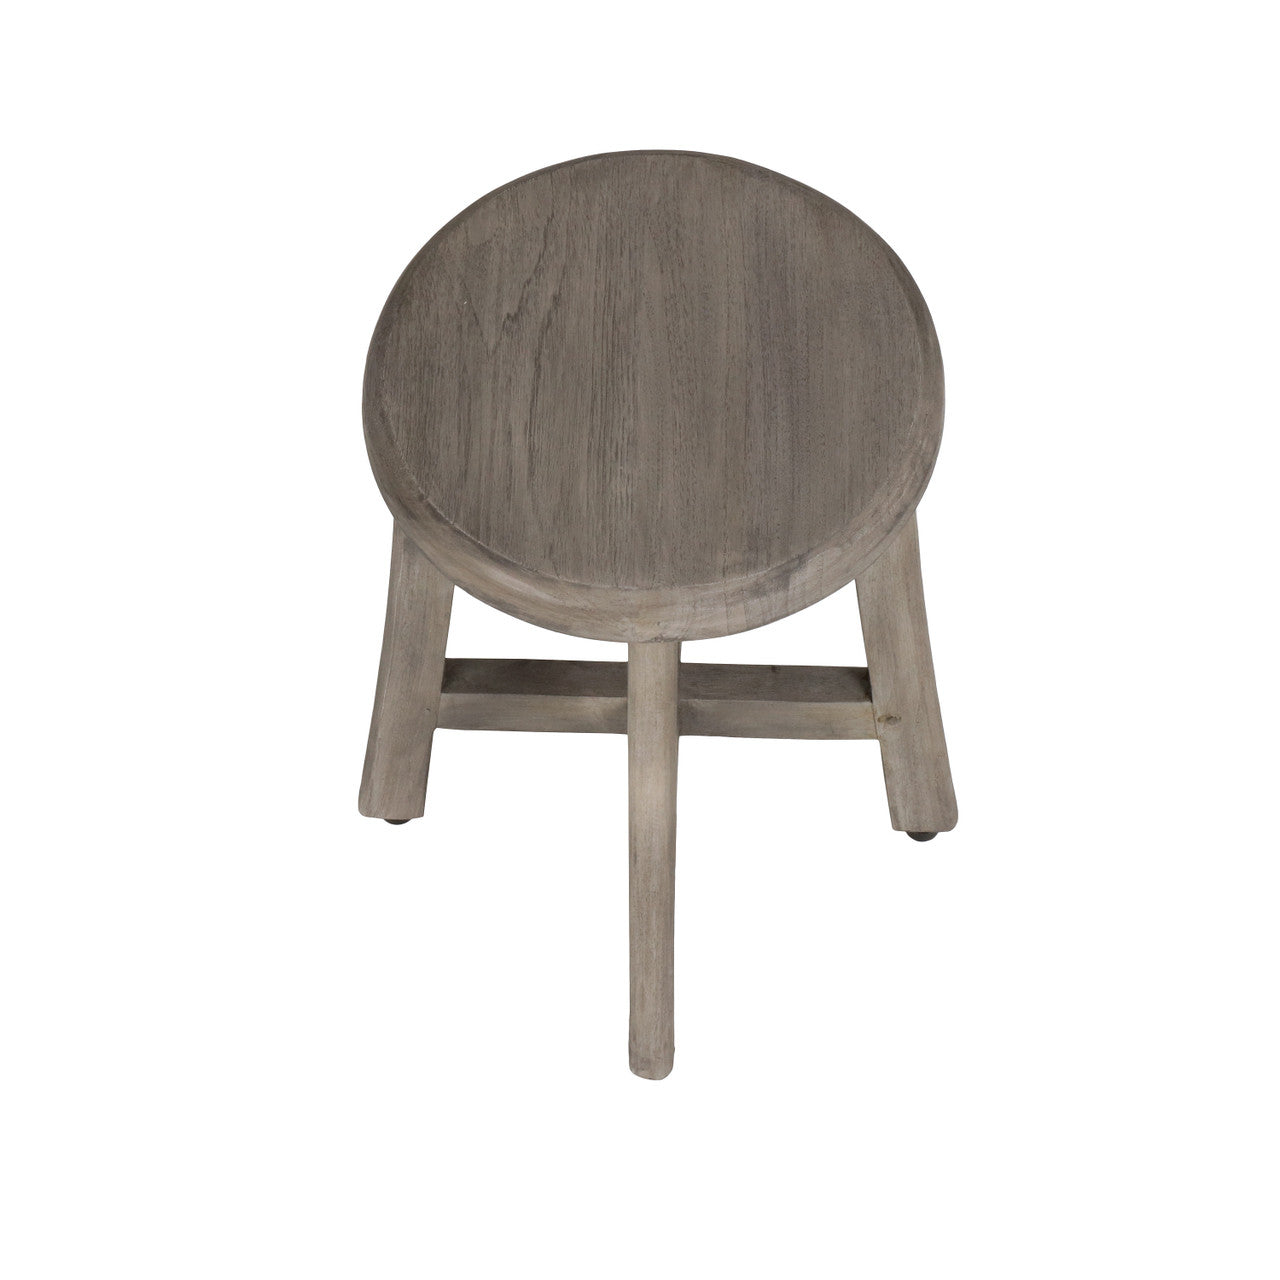 DecoTeak® Shoji® 18" Teak Wood Shower Stool with 12" Round Seat in Antique Gray Finish